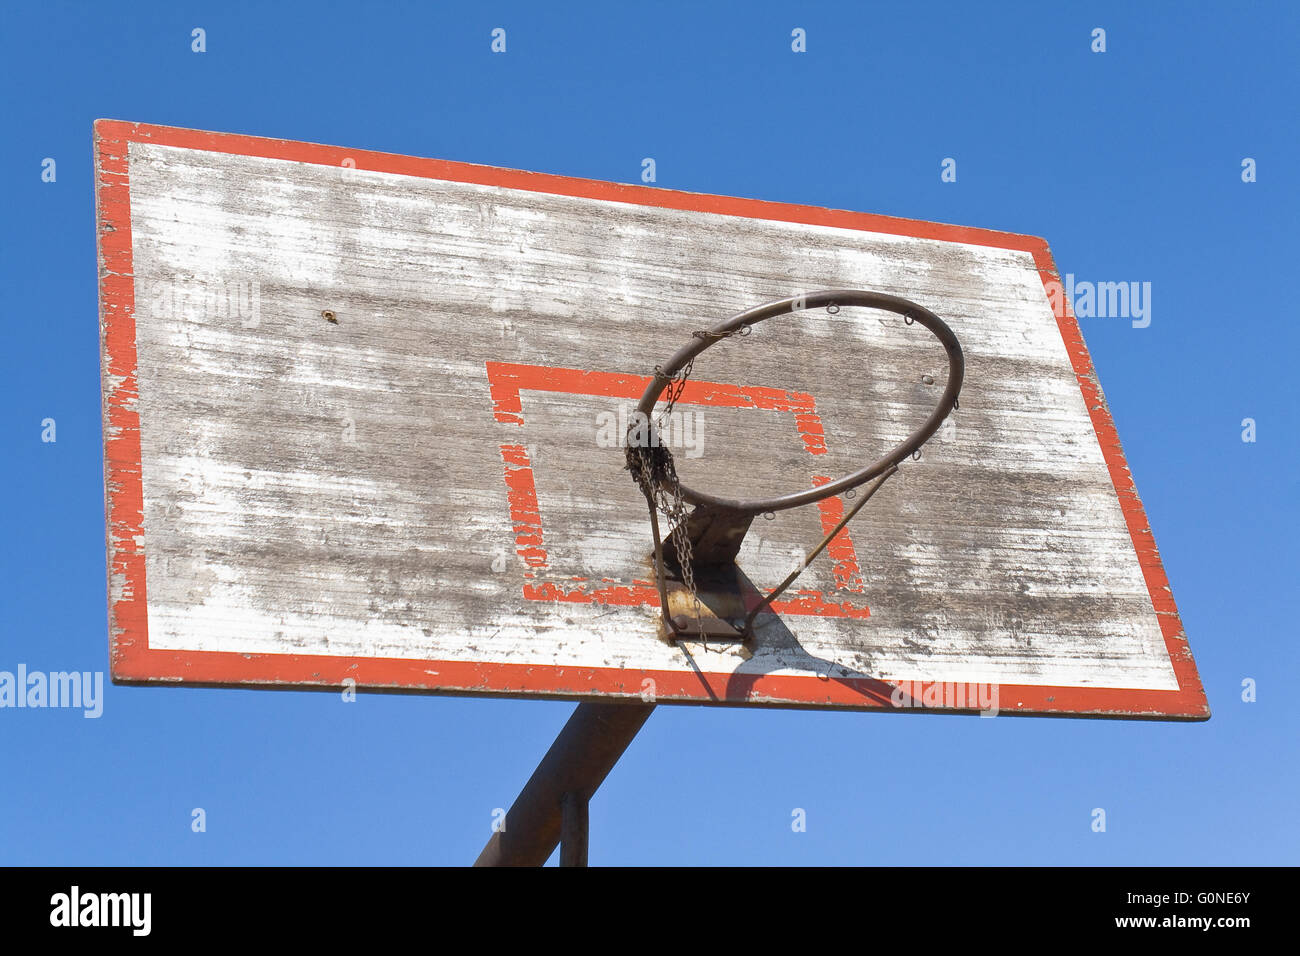 Old basketball hoop over blue sky Stock Photo